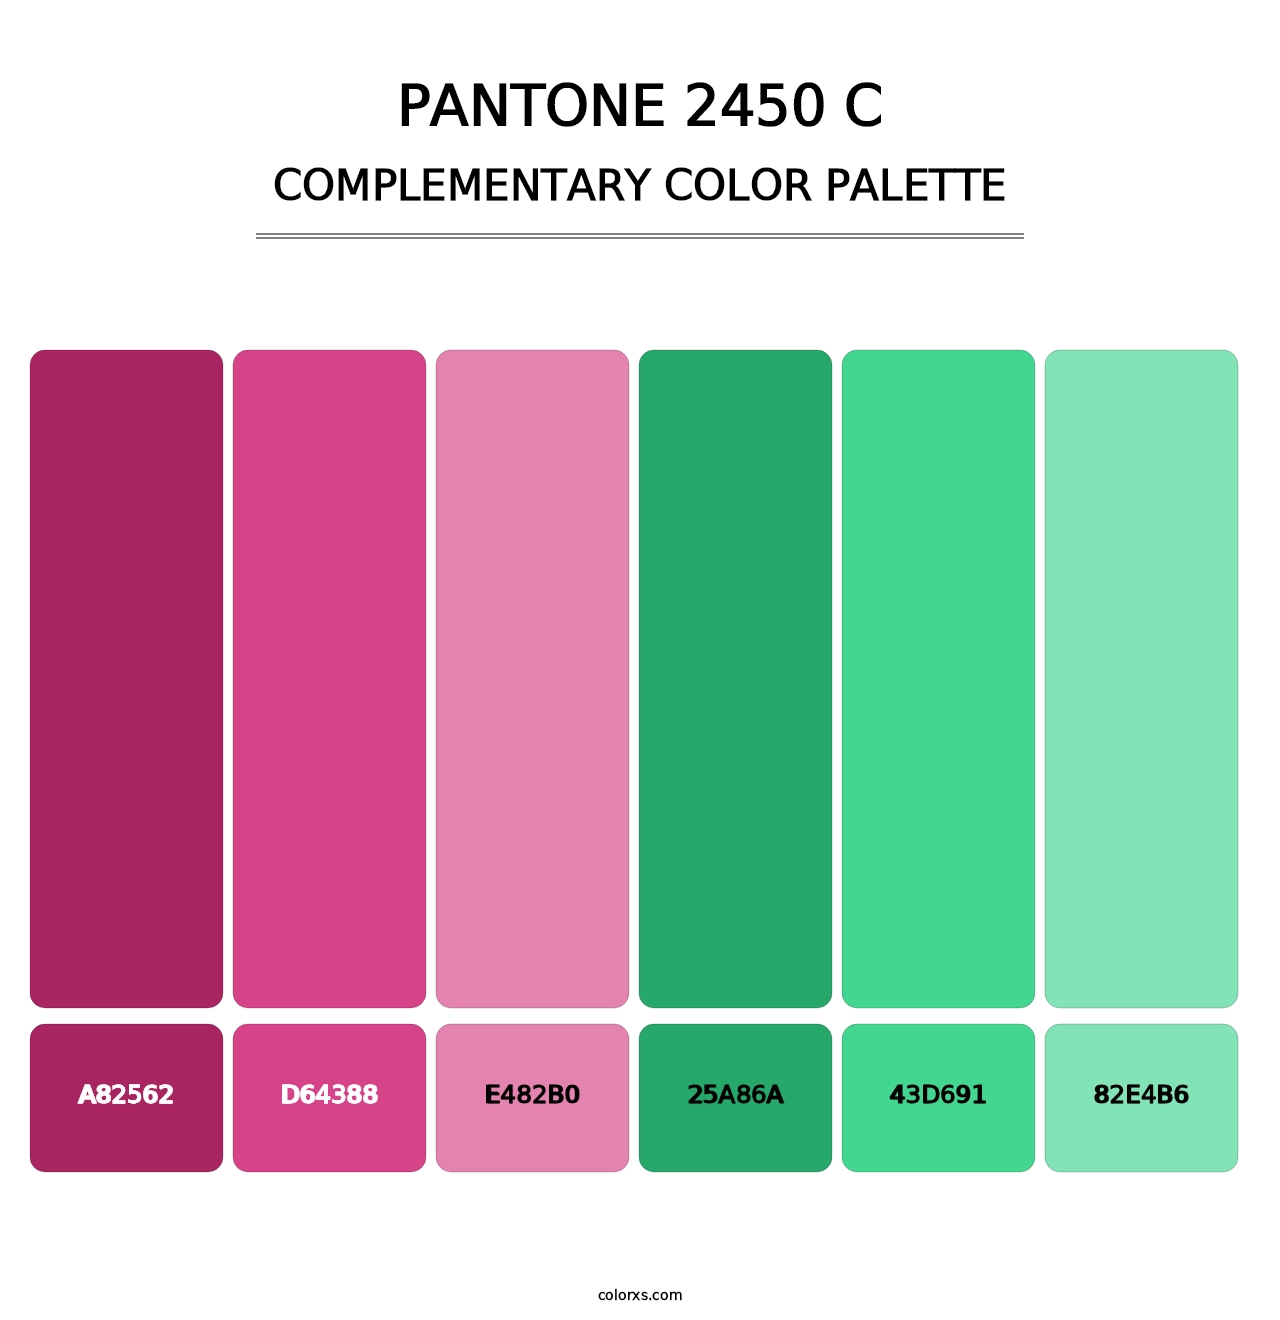 PANTONE 2450 C - Complementary Color Palette